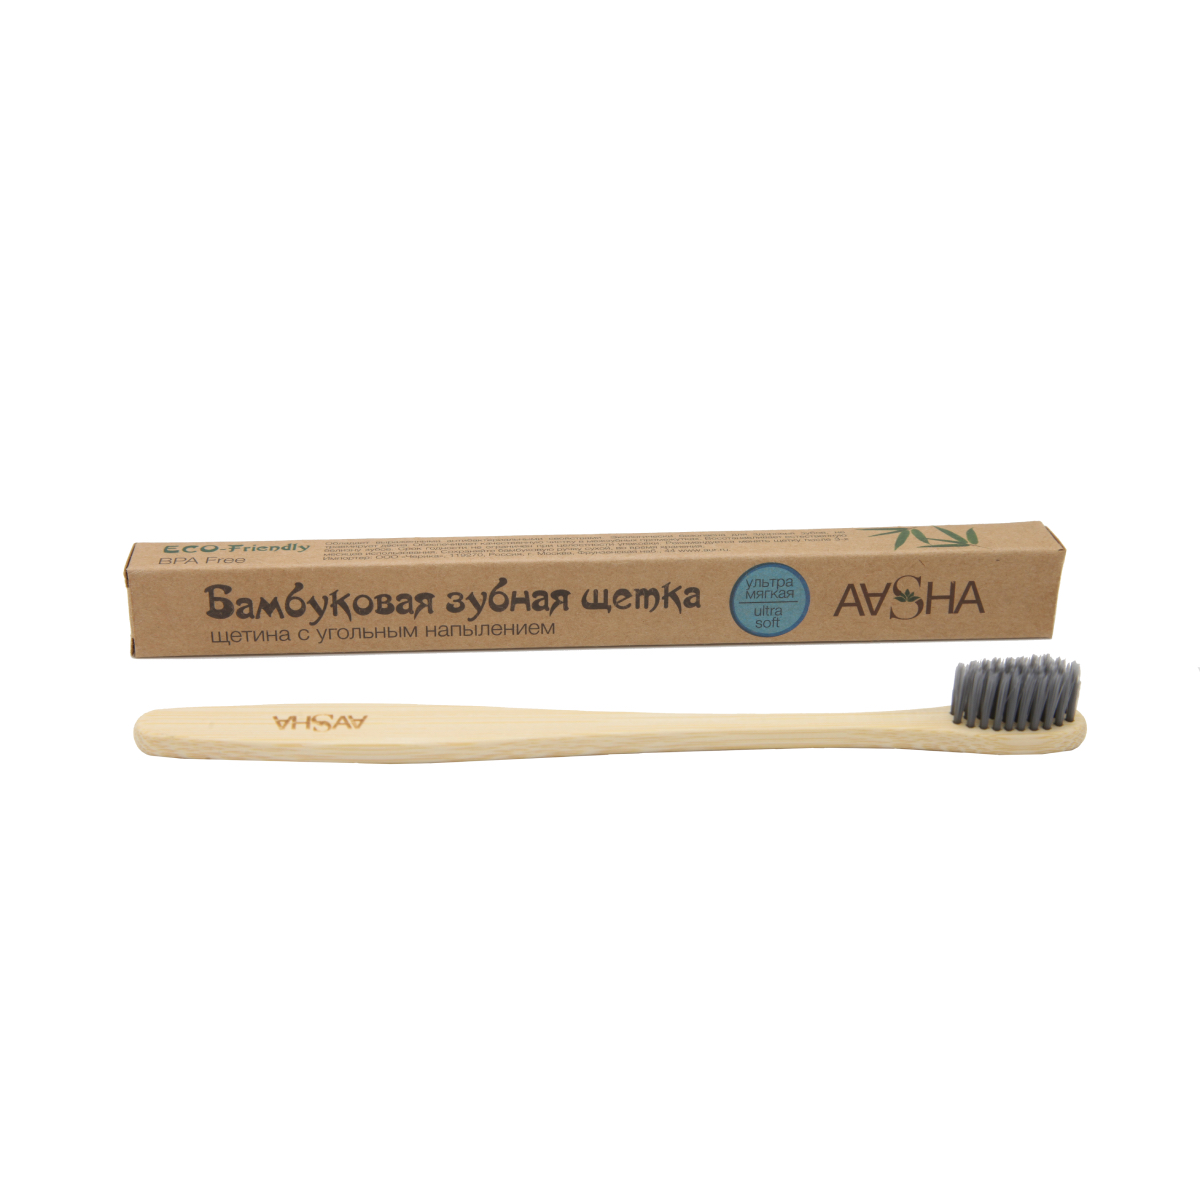 Бамбуковая зубная щетка Aasha с угольным напылением ULTRA SOFT (Ультра мягкая), 1 шт.